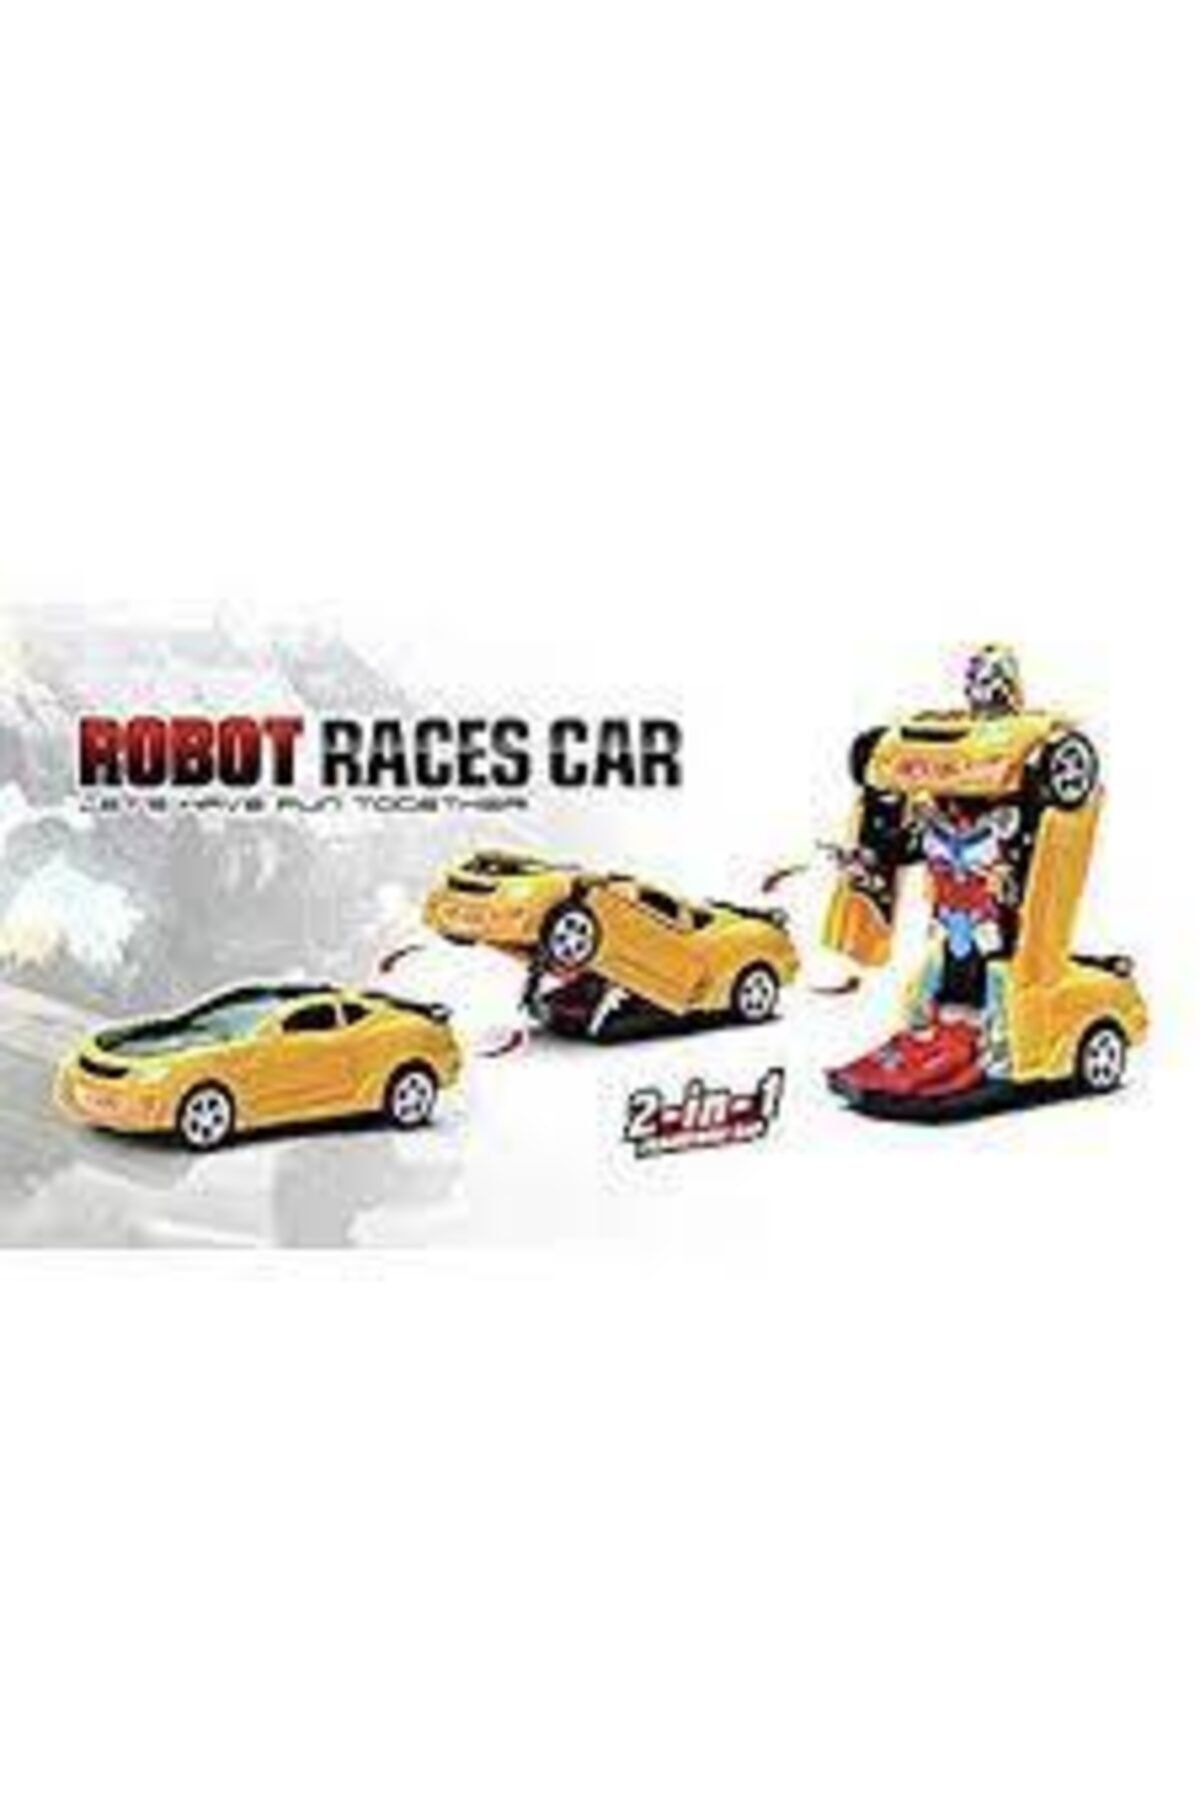 Şahin Robot Races Car - 2-in-1 - Transform Car